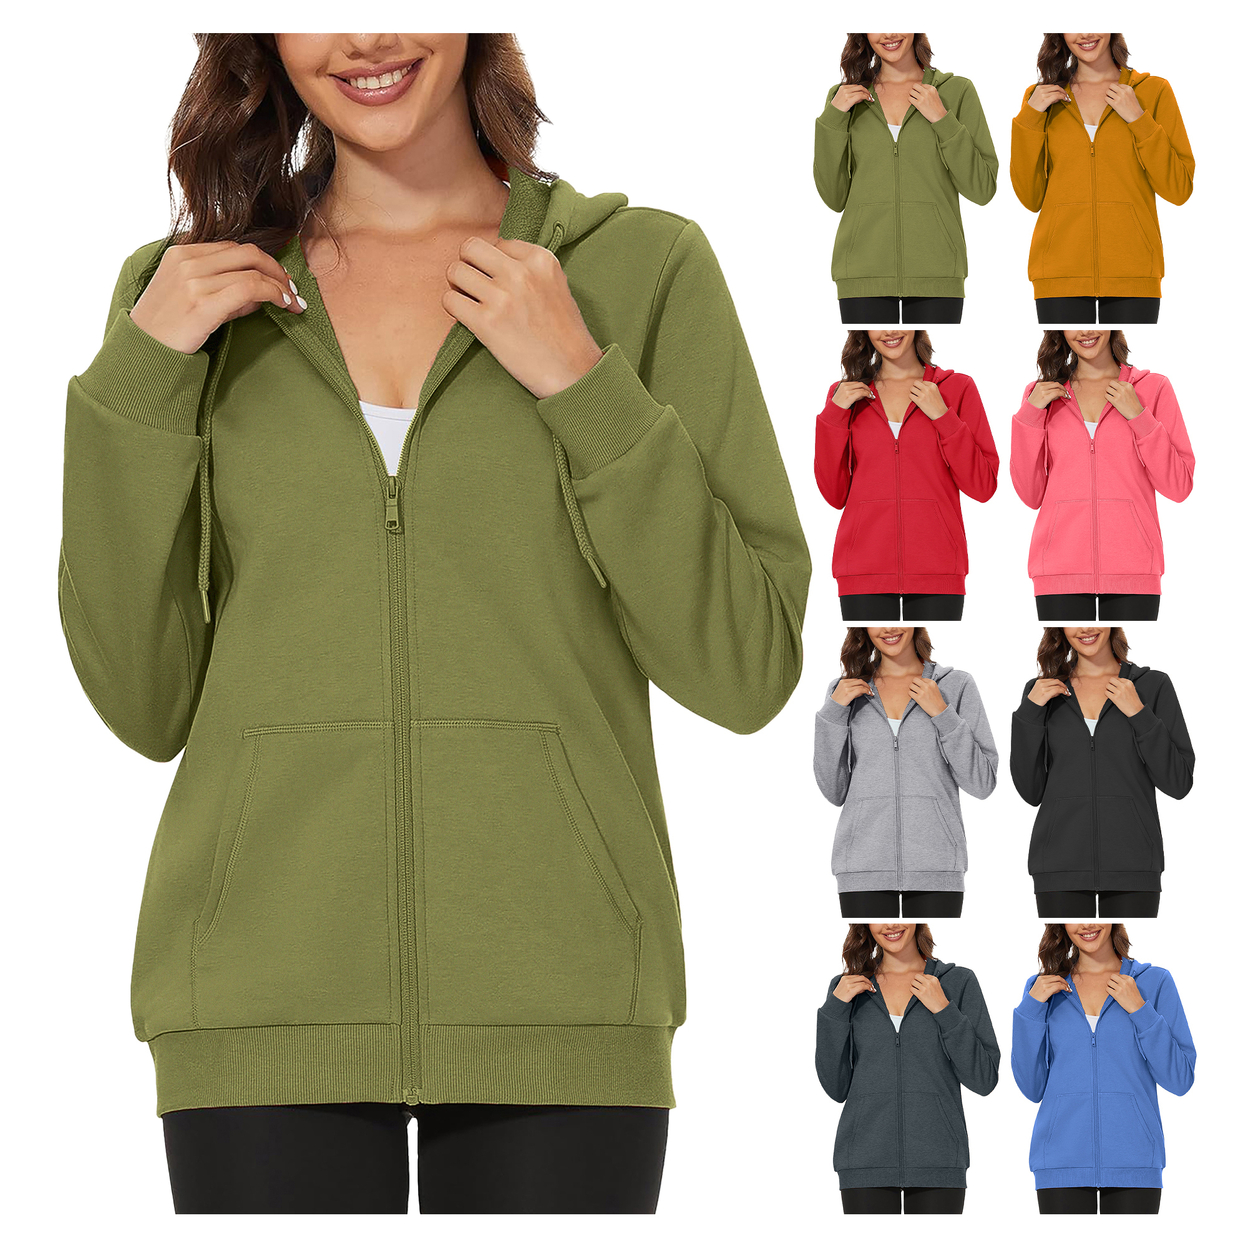 2-Pack: Women's Winter Warm Soft Blend Fleece Lined Full Zip Up Hoodie - Black & Black, Medium